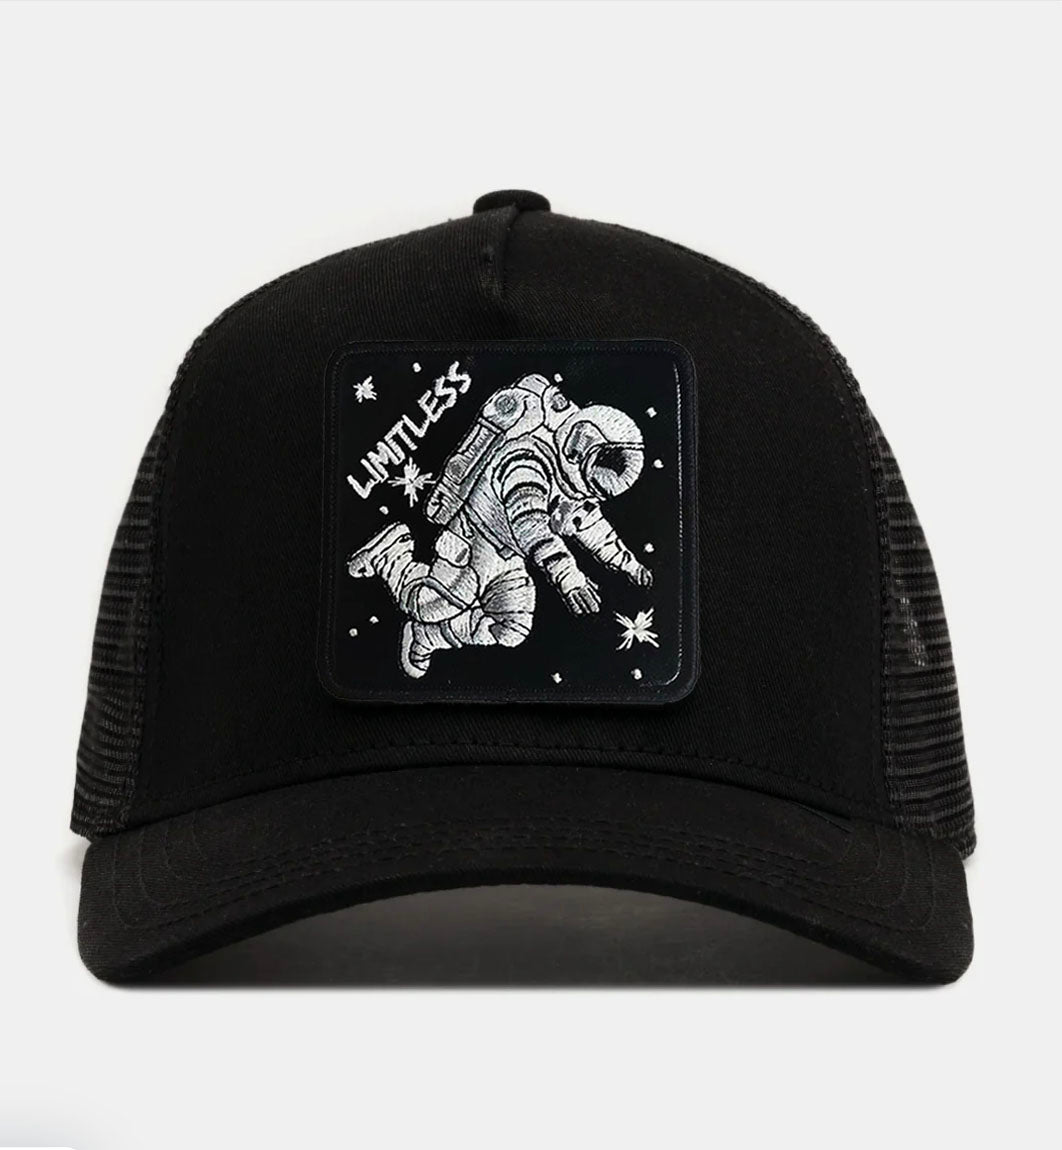 Astronaut - "Limitless" Trucker Hat